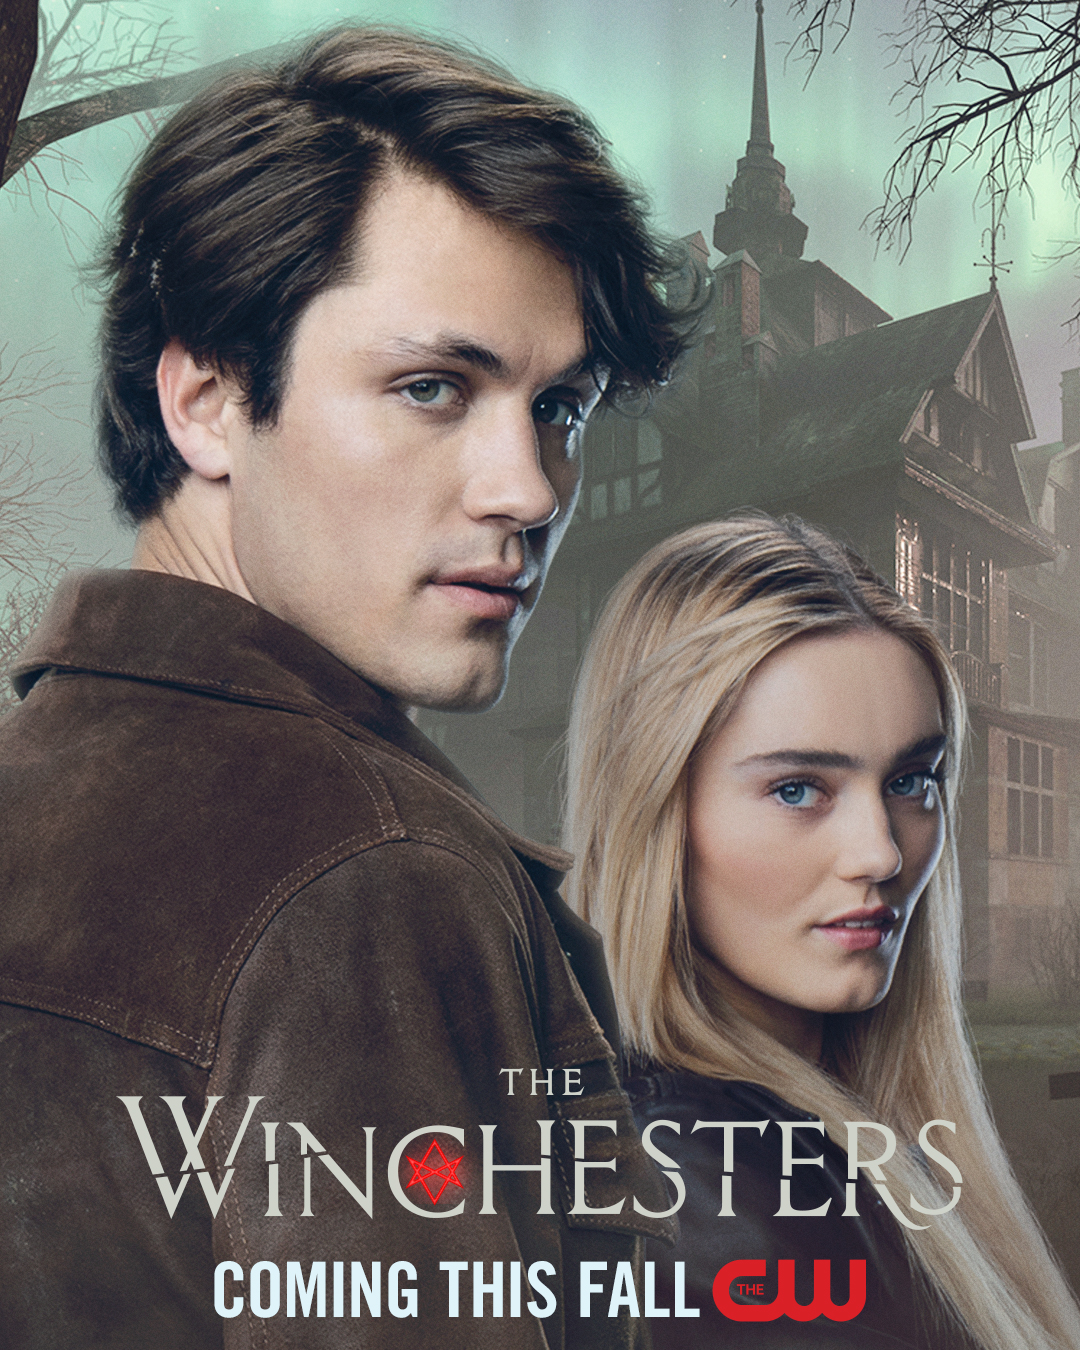 The Winchesters Season 1 Episode 1